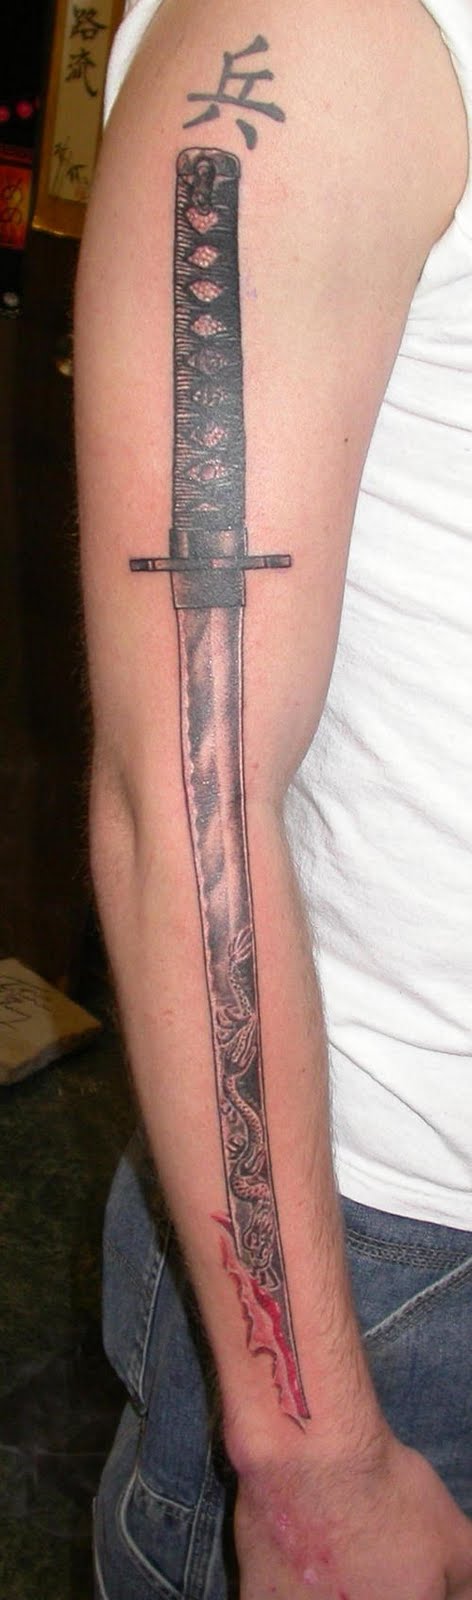 Long katana tattoo on arm.